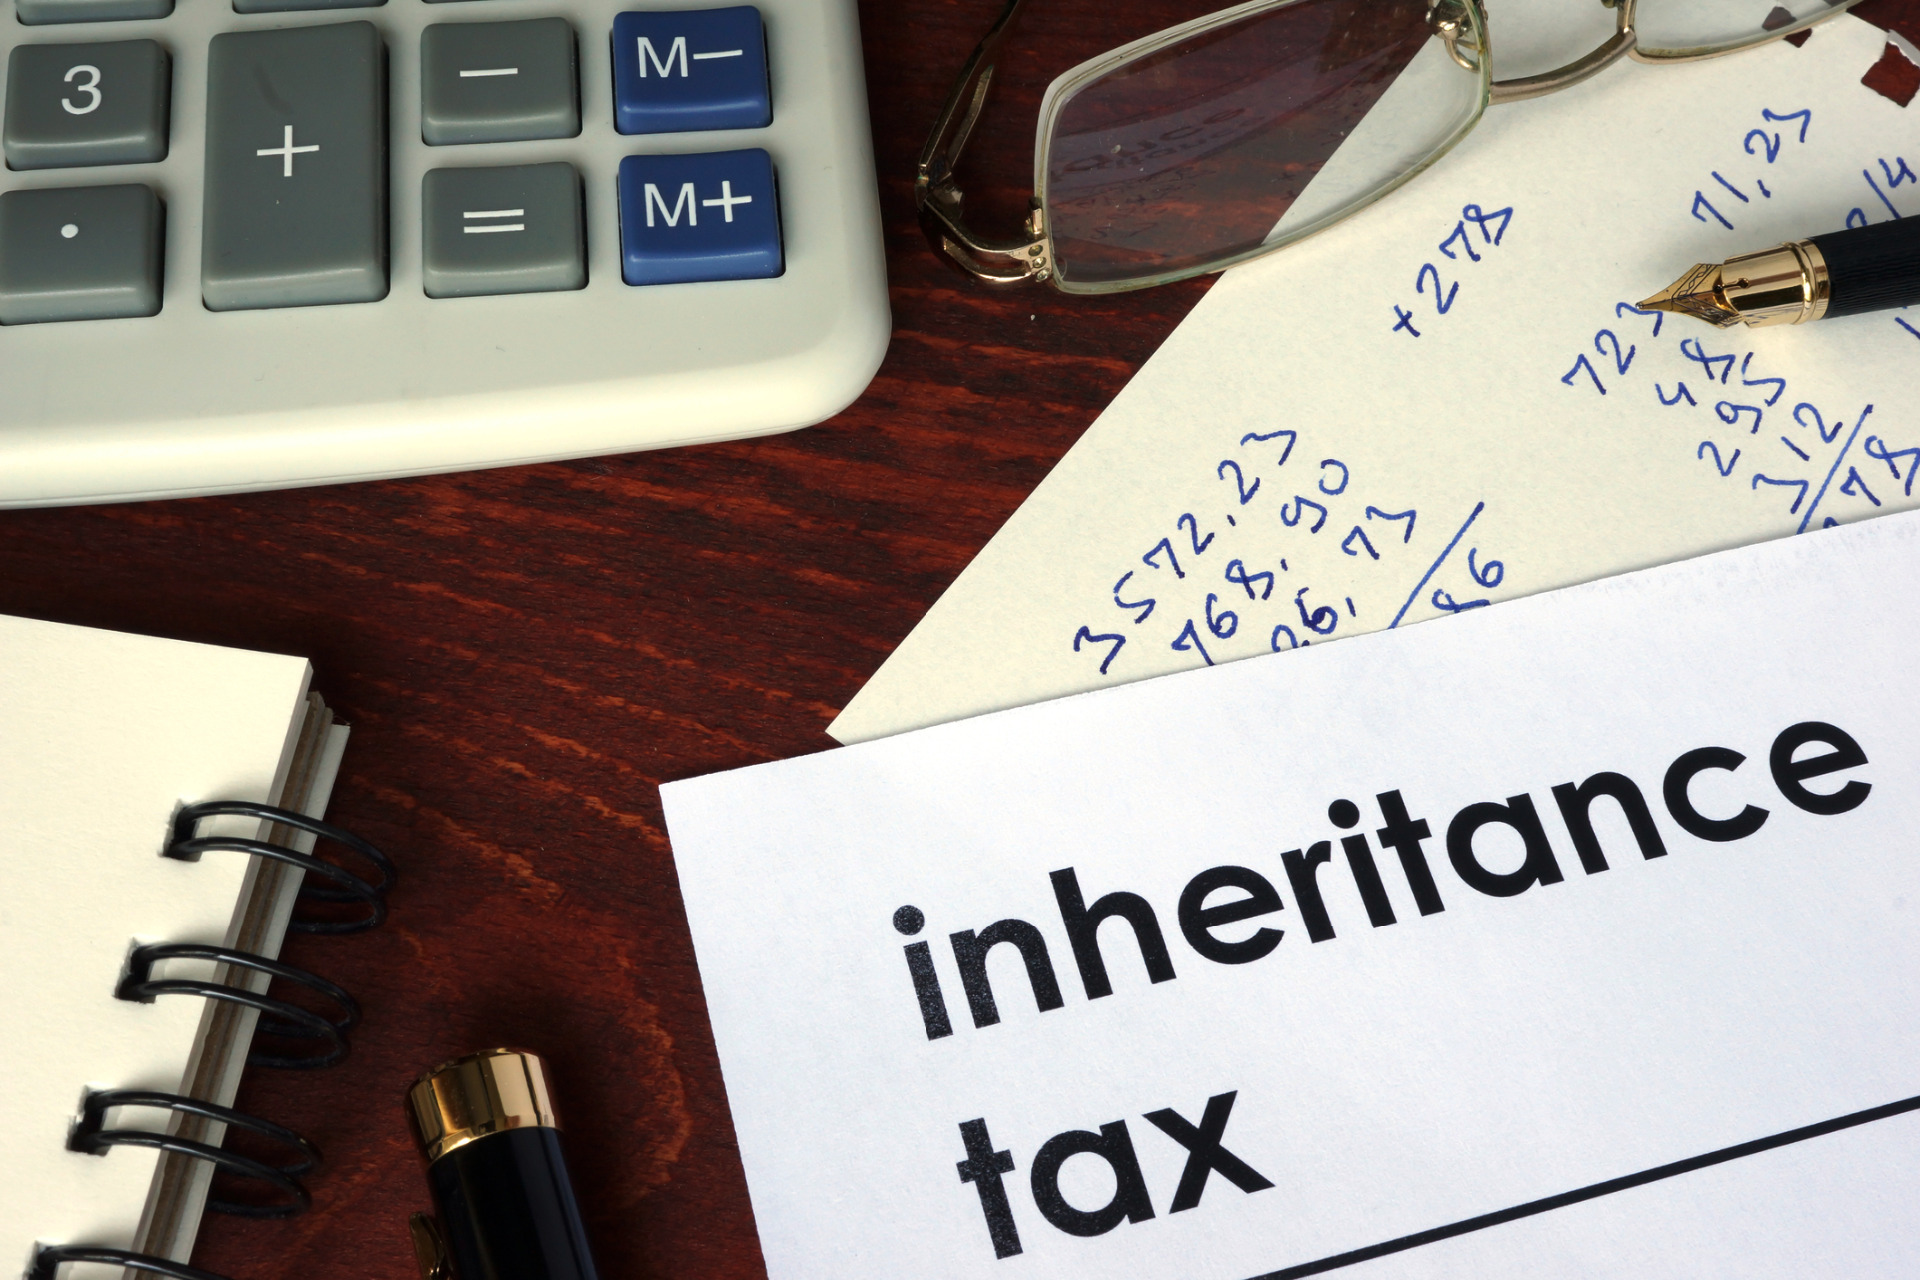 Inheritance Tax calculations